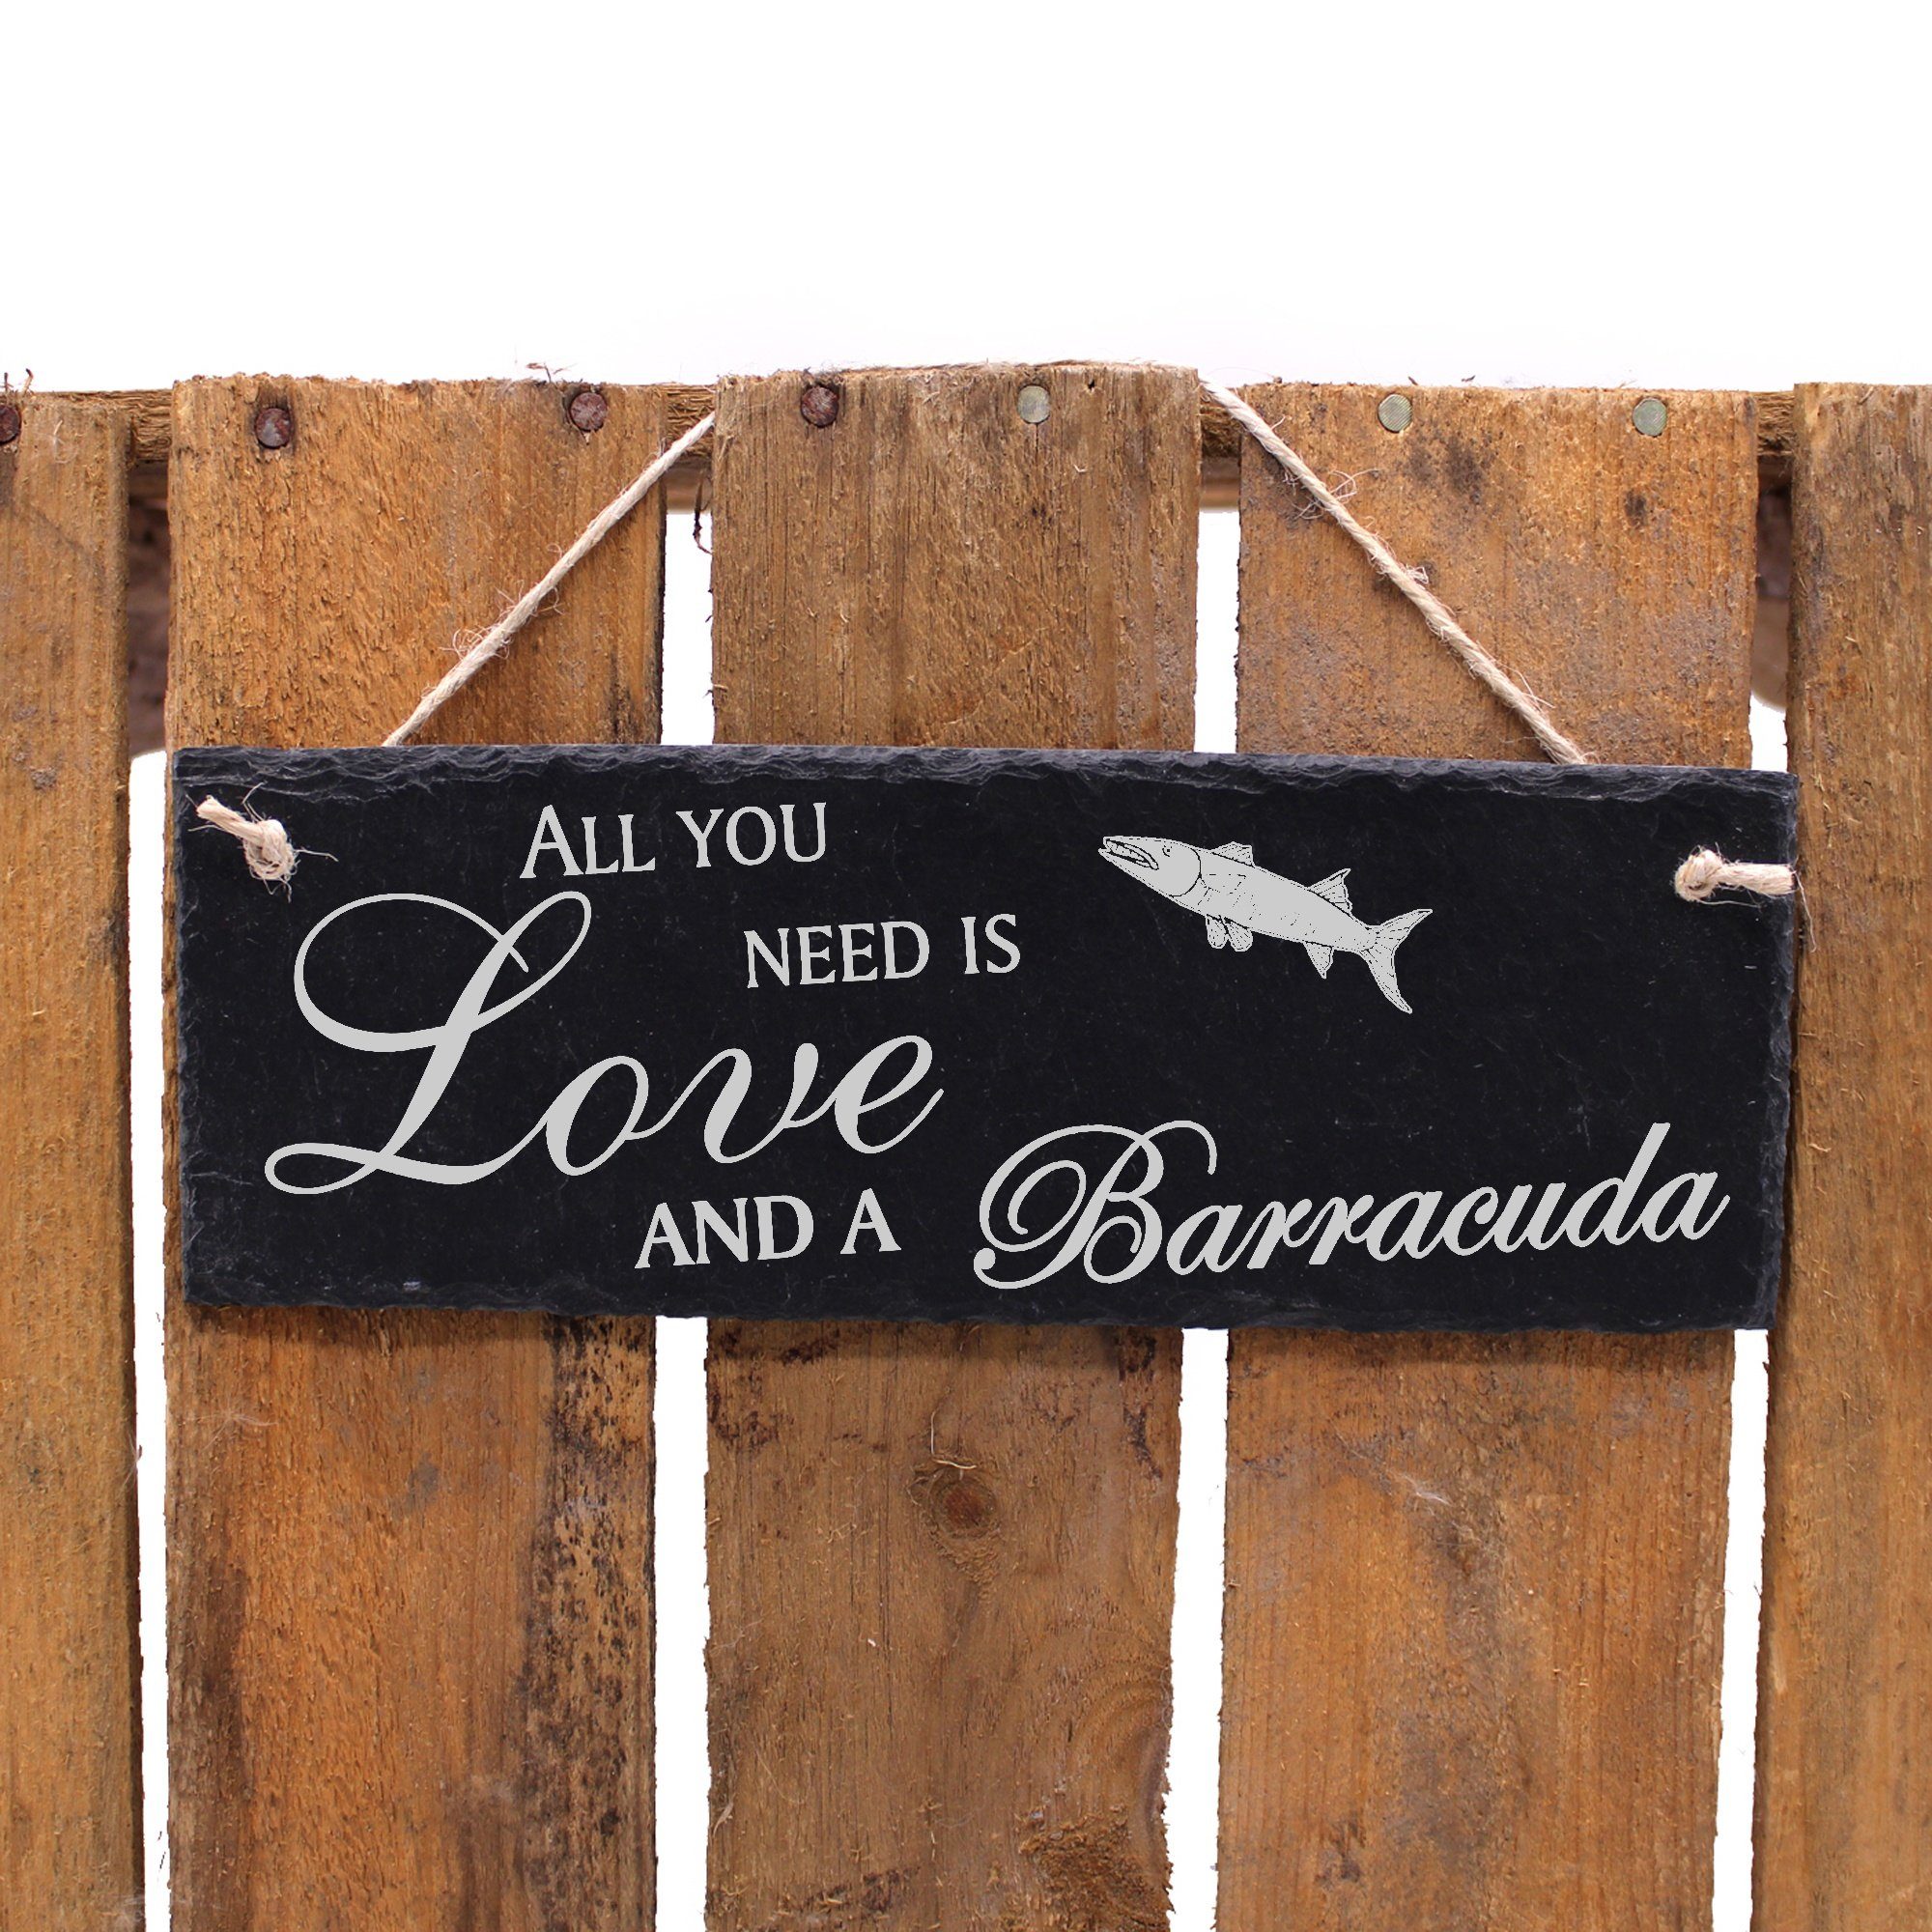 Hängedekoration 22x8cm a Barracuda is you Love and need All Barakuda Dekolando